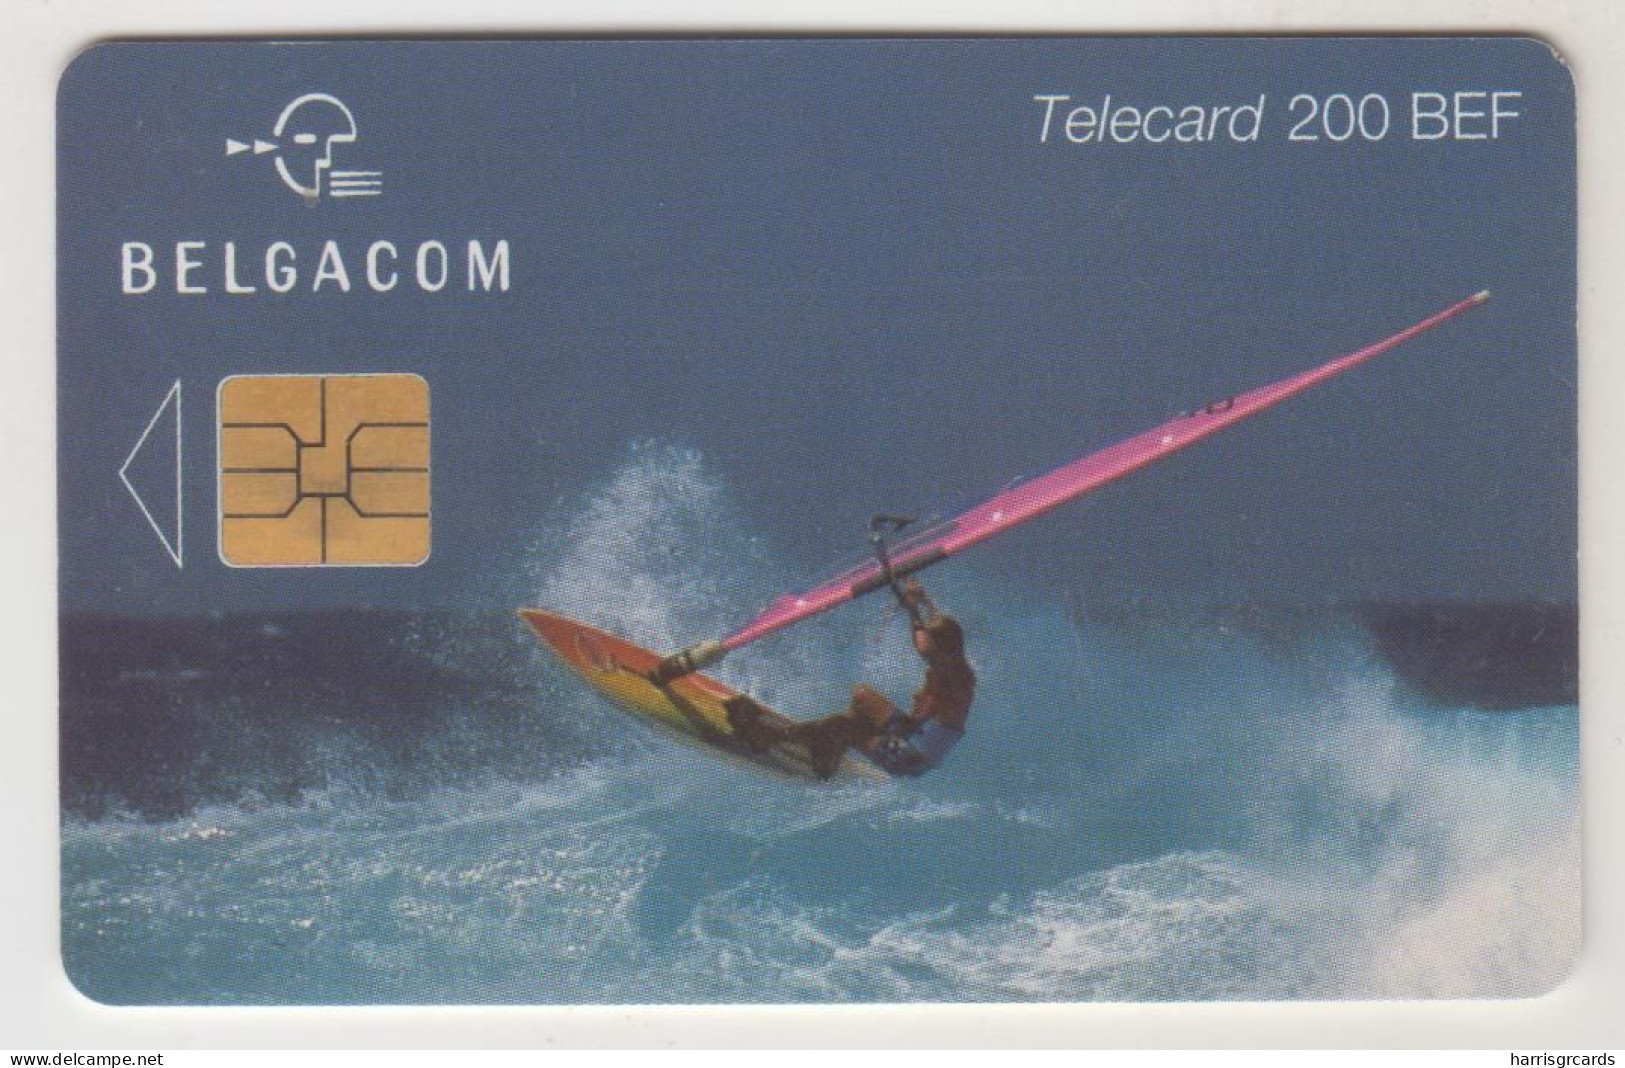 BELGIUM - Surfer, 200 BEF, Tirage 150.000, Used - Mit Chip